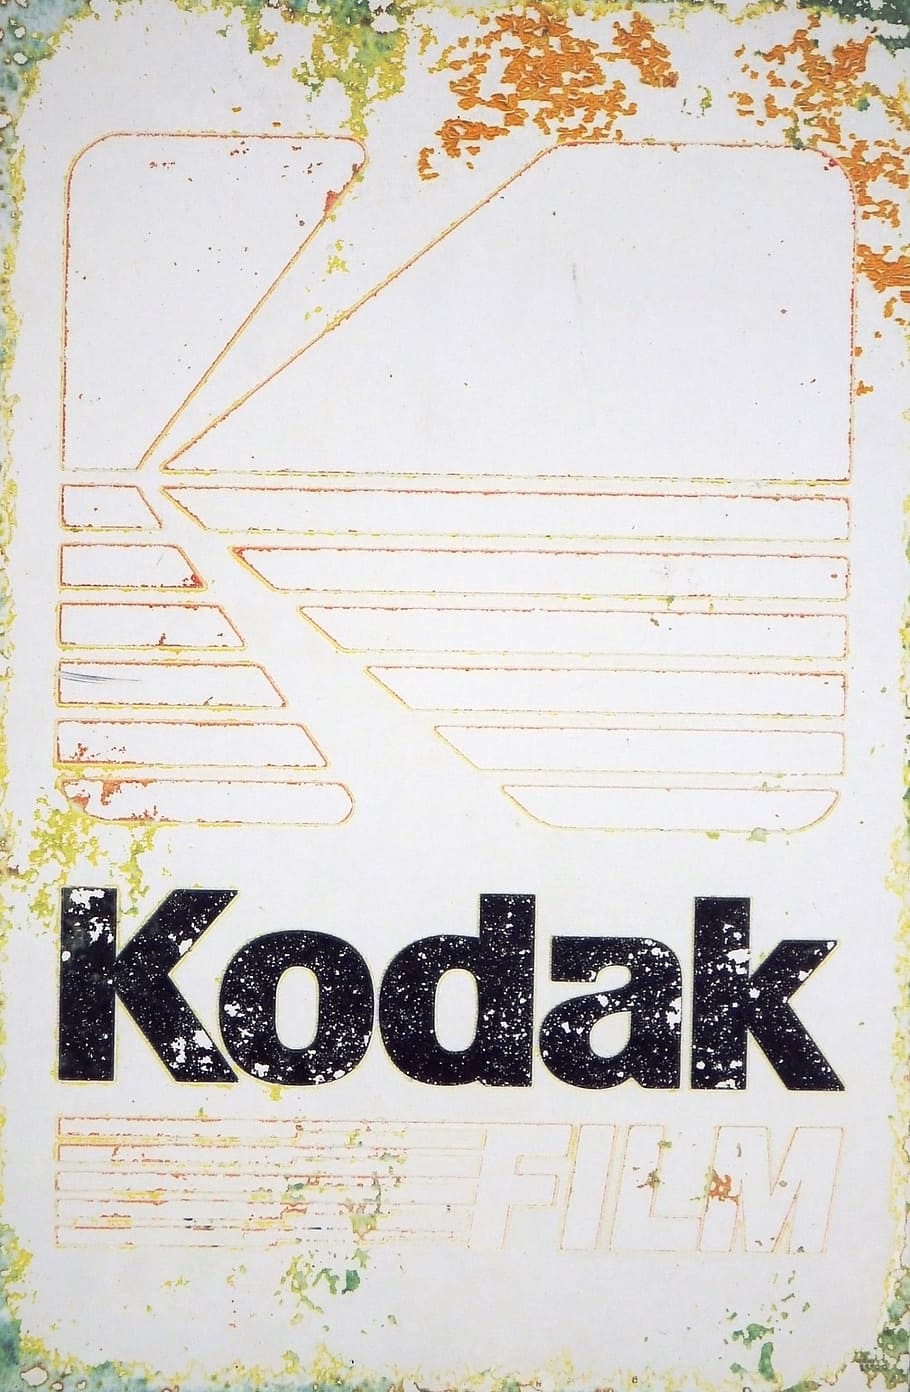 vintage, aged, advertising sign board, kodak camera brand, -, editorial use, kodak, kodac, camera, photography